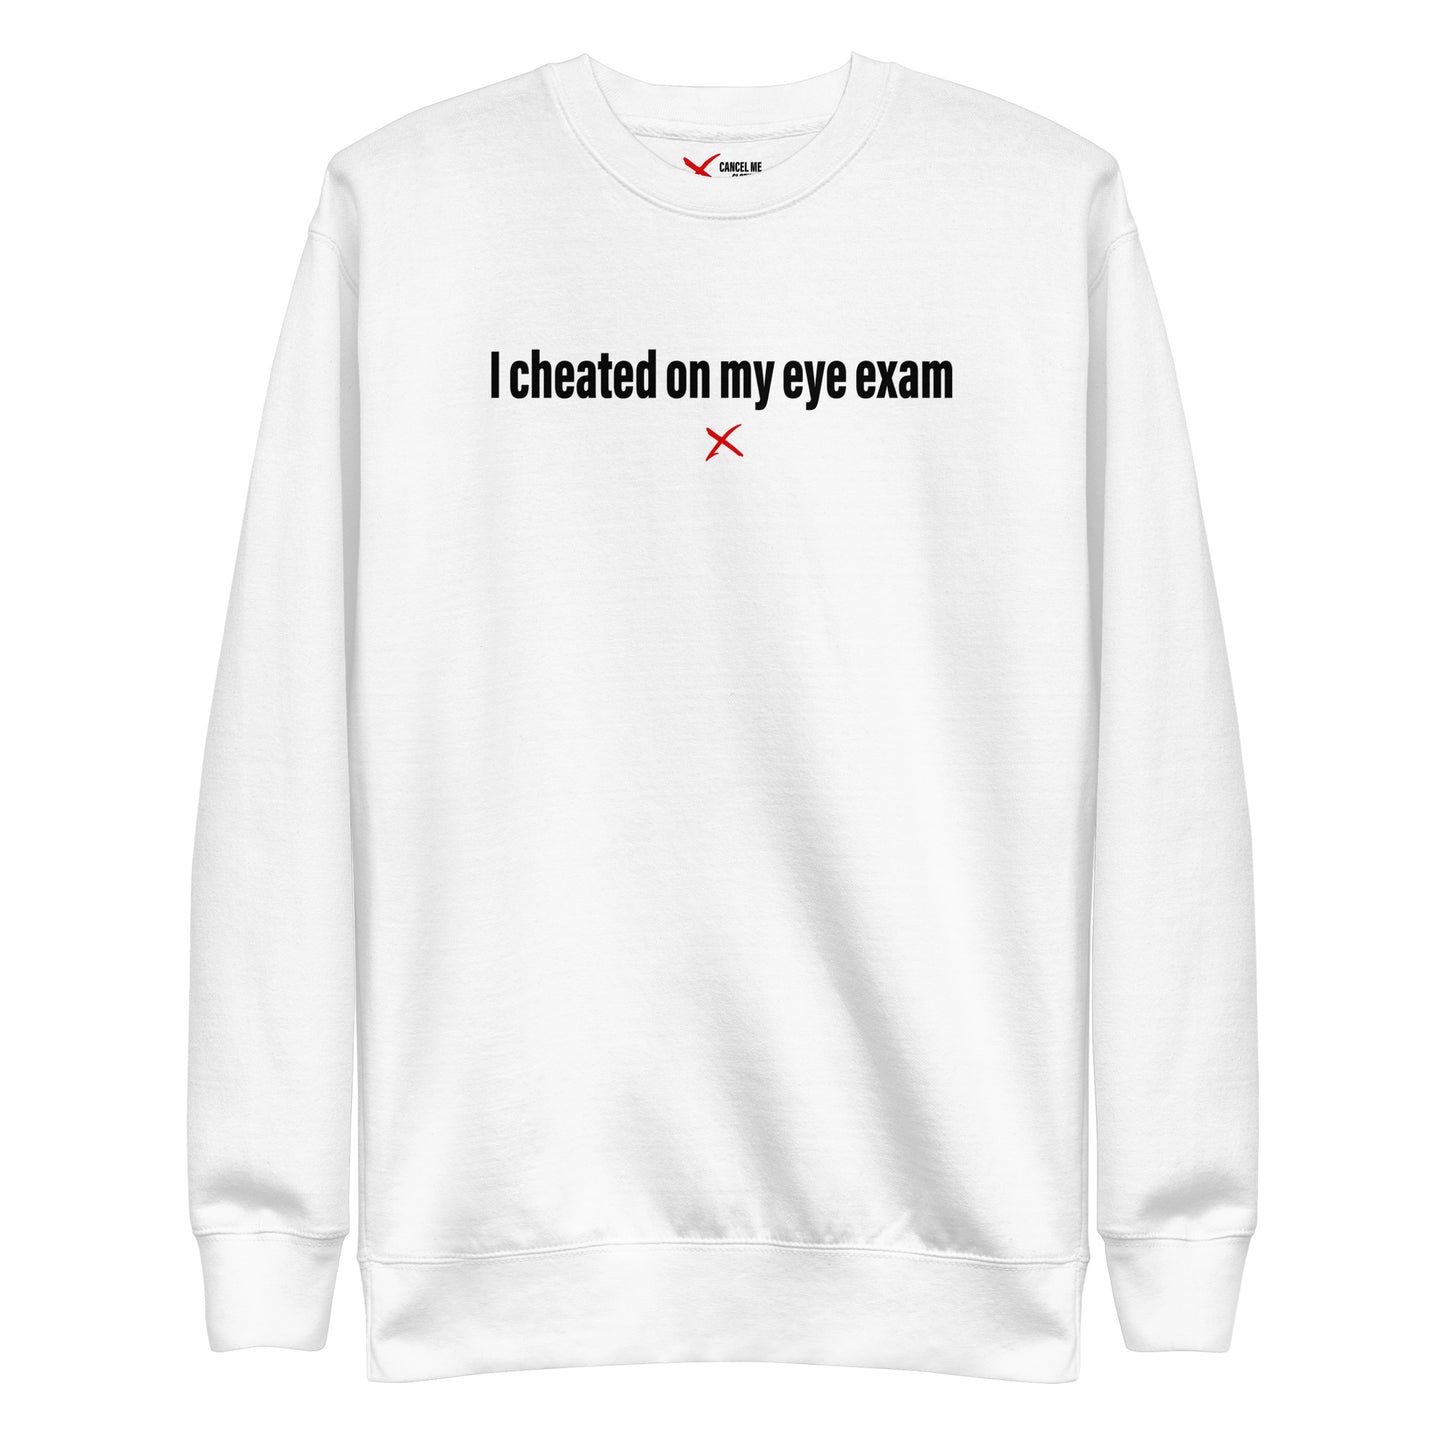 I cheated on my eye exam - Sweatshirt